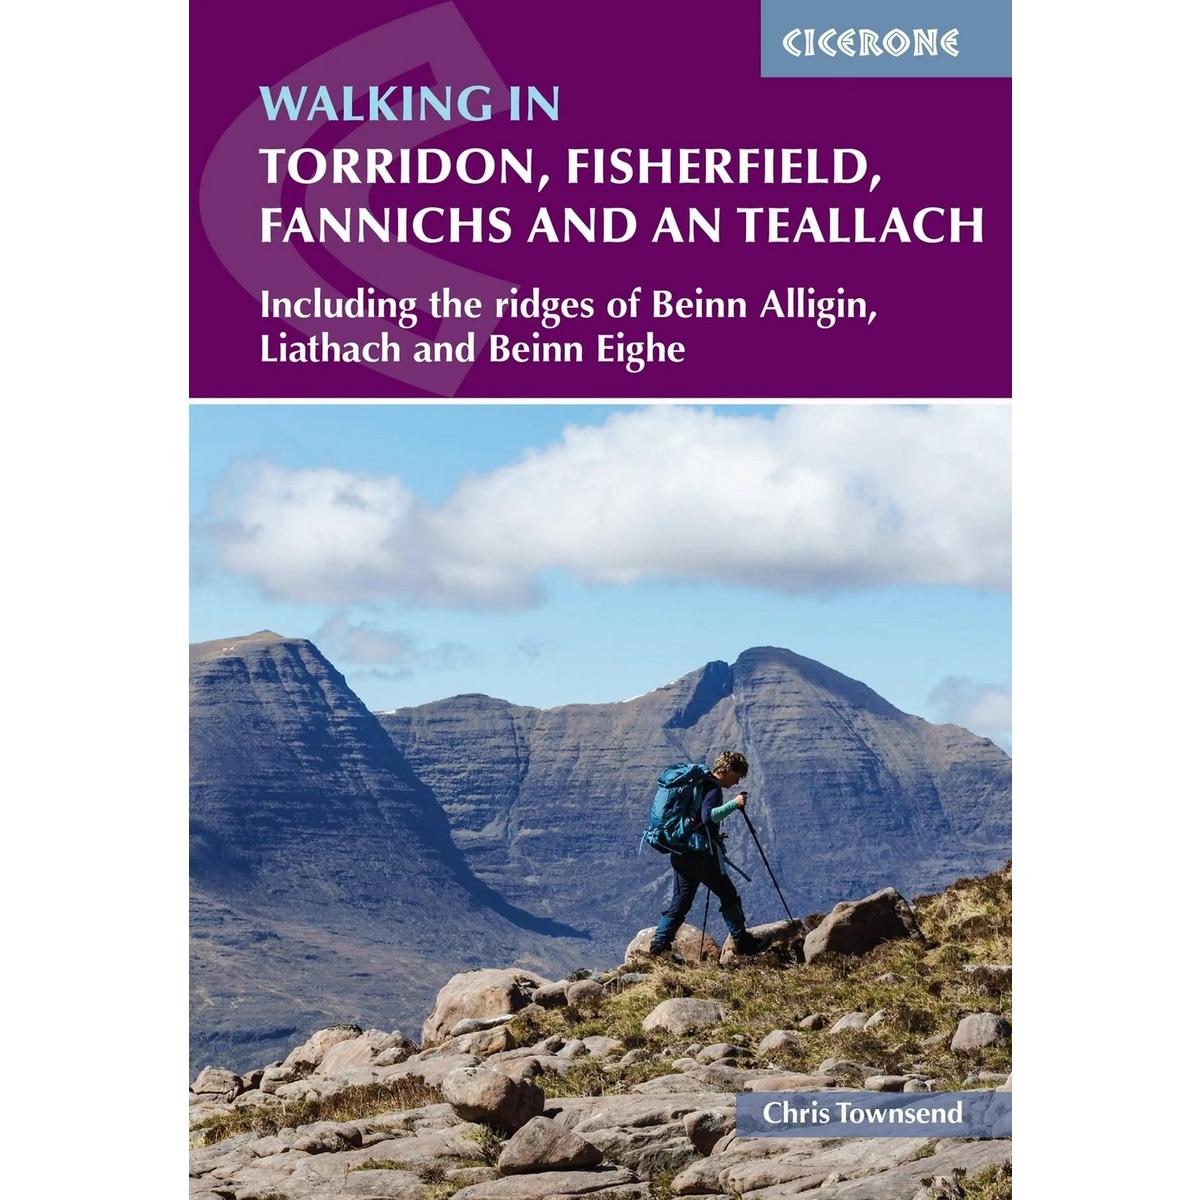 Cicerone Walking in Torridon, Fisherfield, Fannichs and An Teallach: Including the ridges of Beinn Alligin, Liathach and Beinn Eighe by Chris Townsend